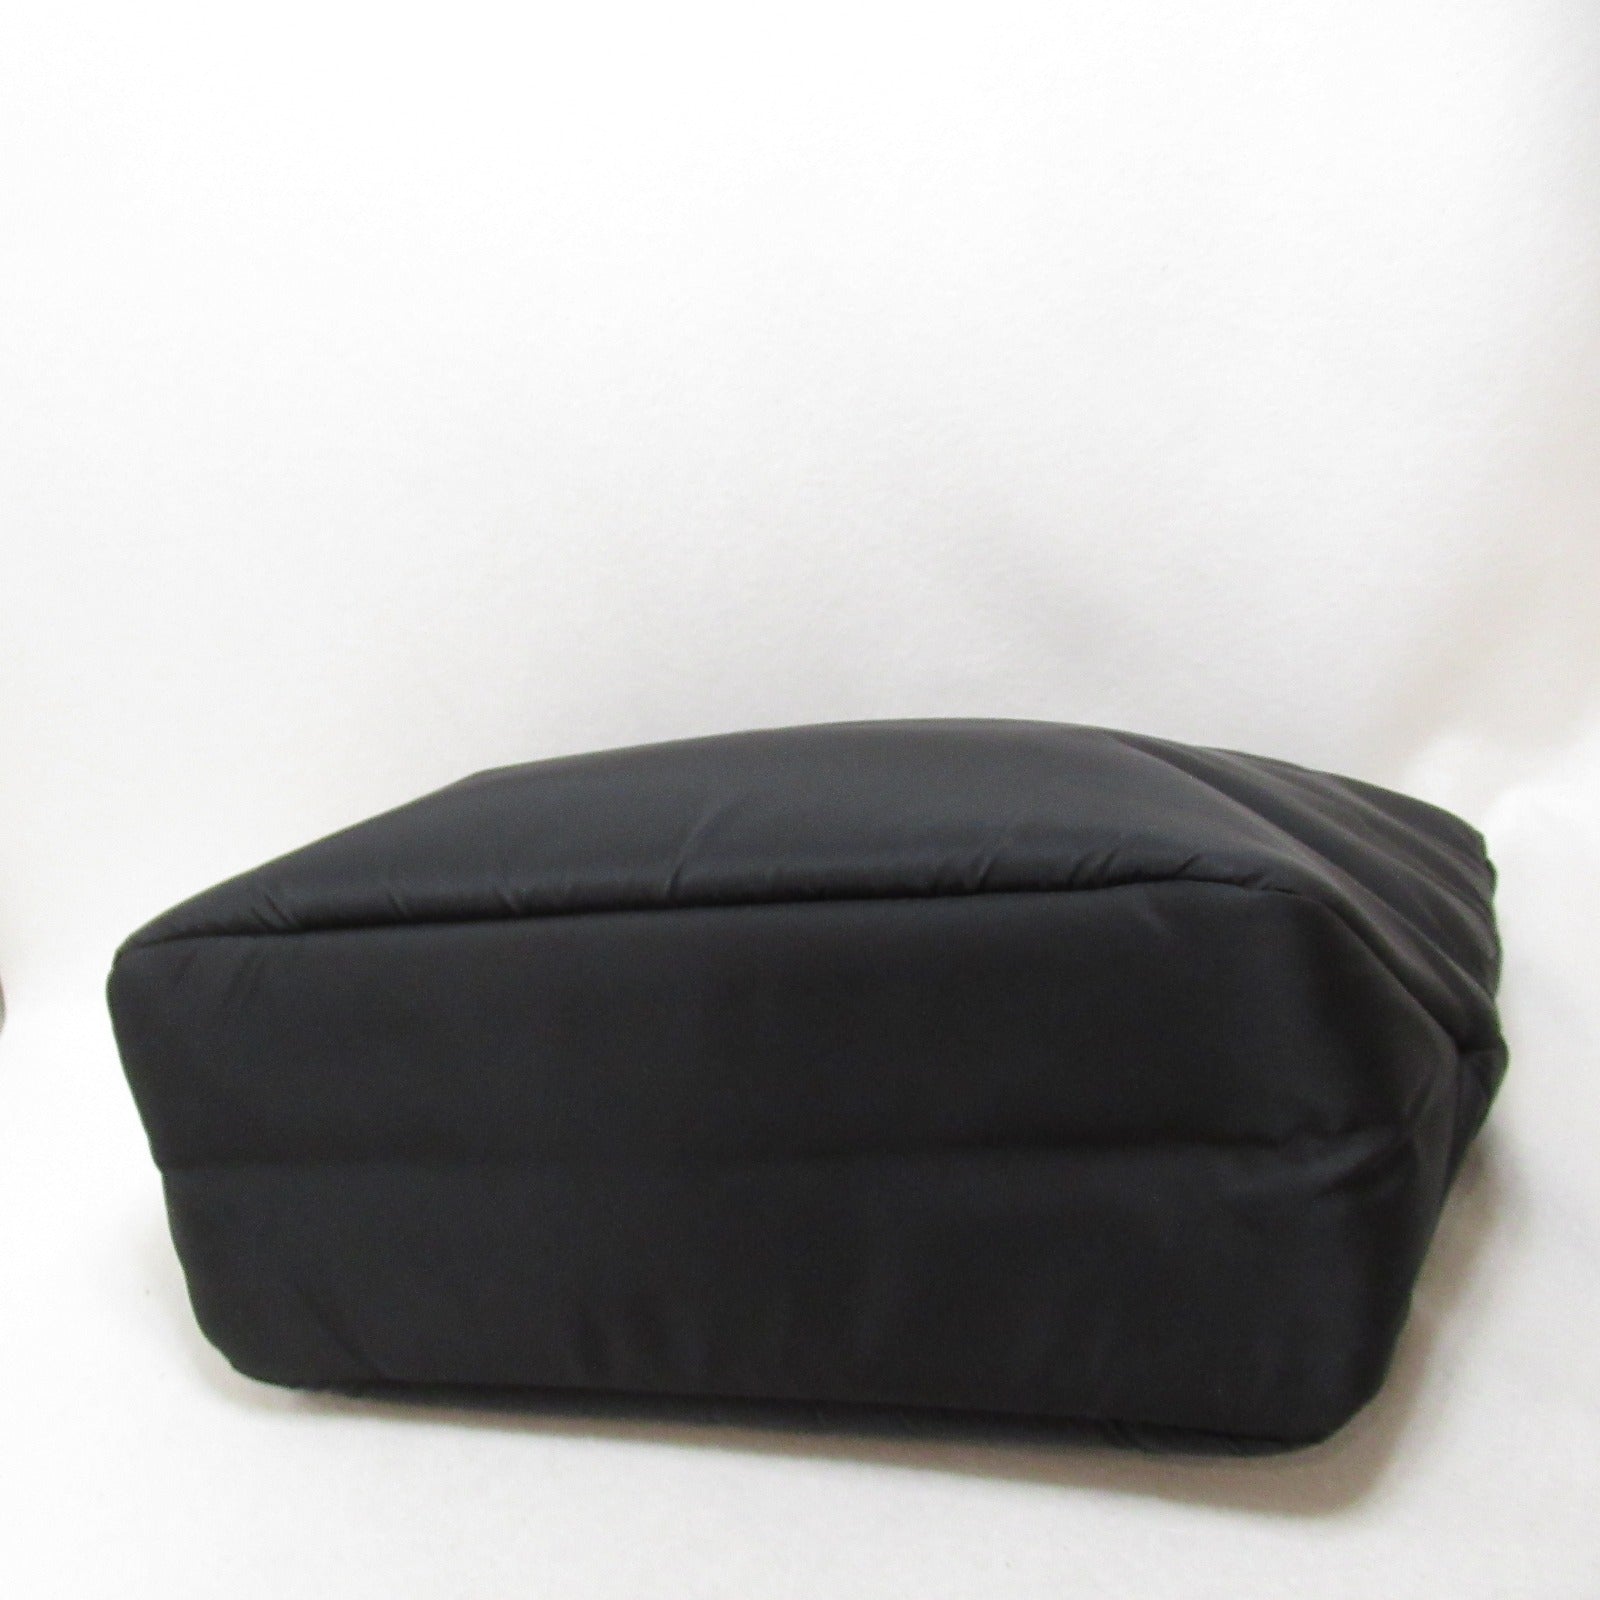 Prada Prada Tote Bag Tote Bag Nylon  Black 1BG217